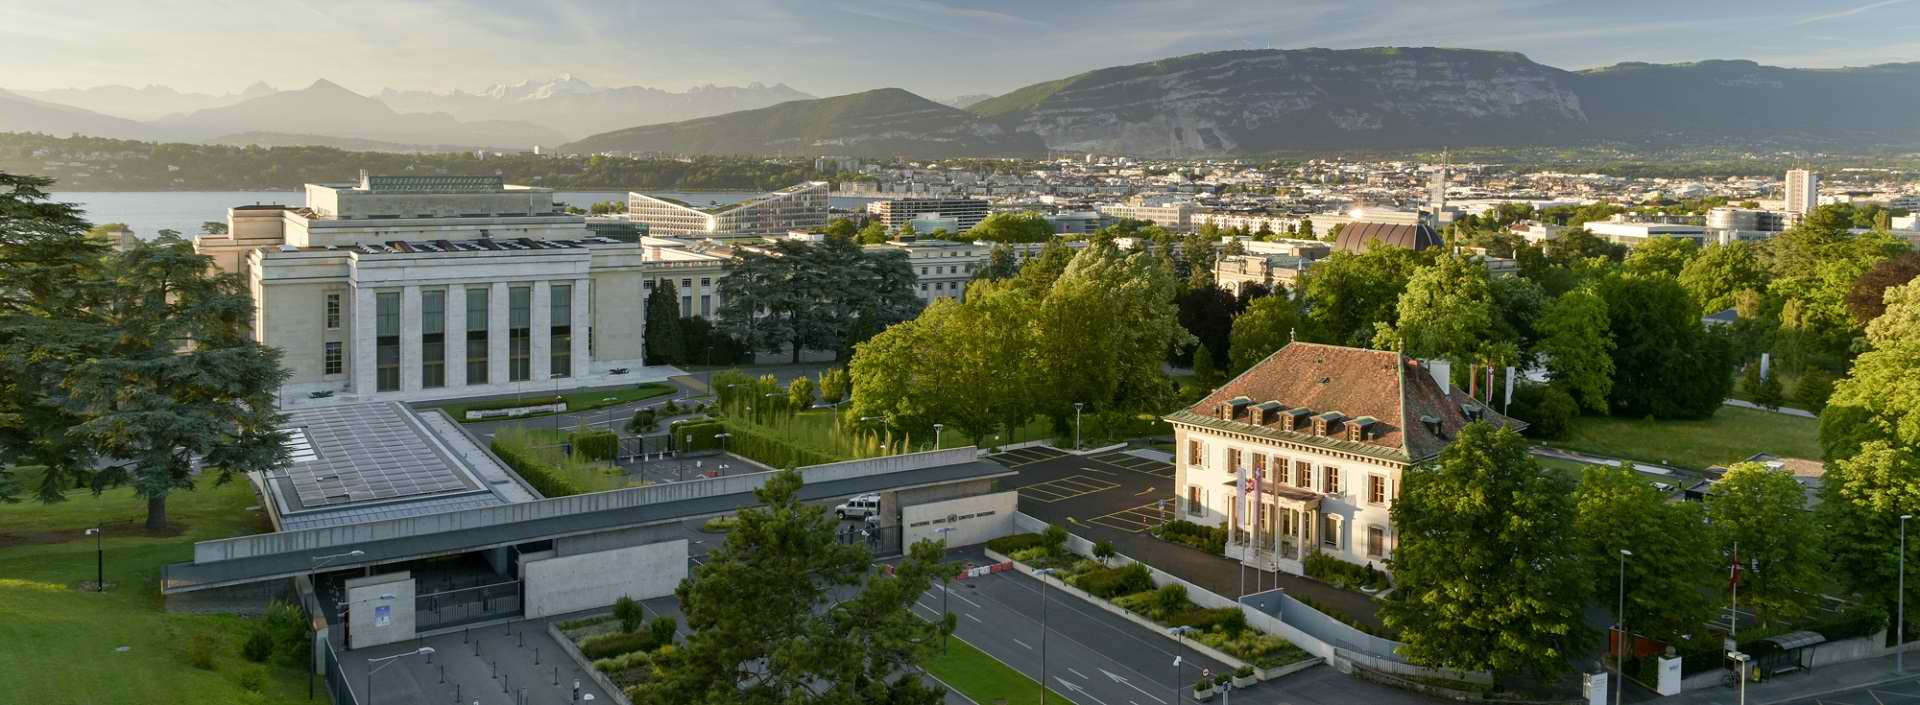 Hotel Management School Geneva